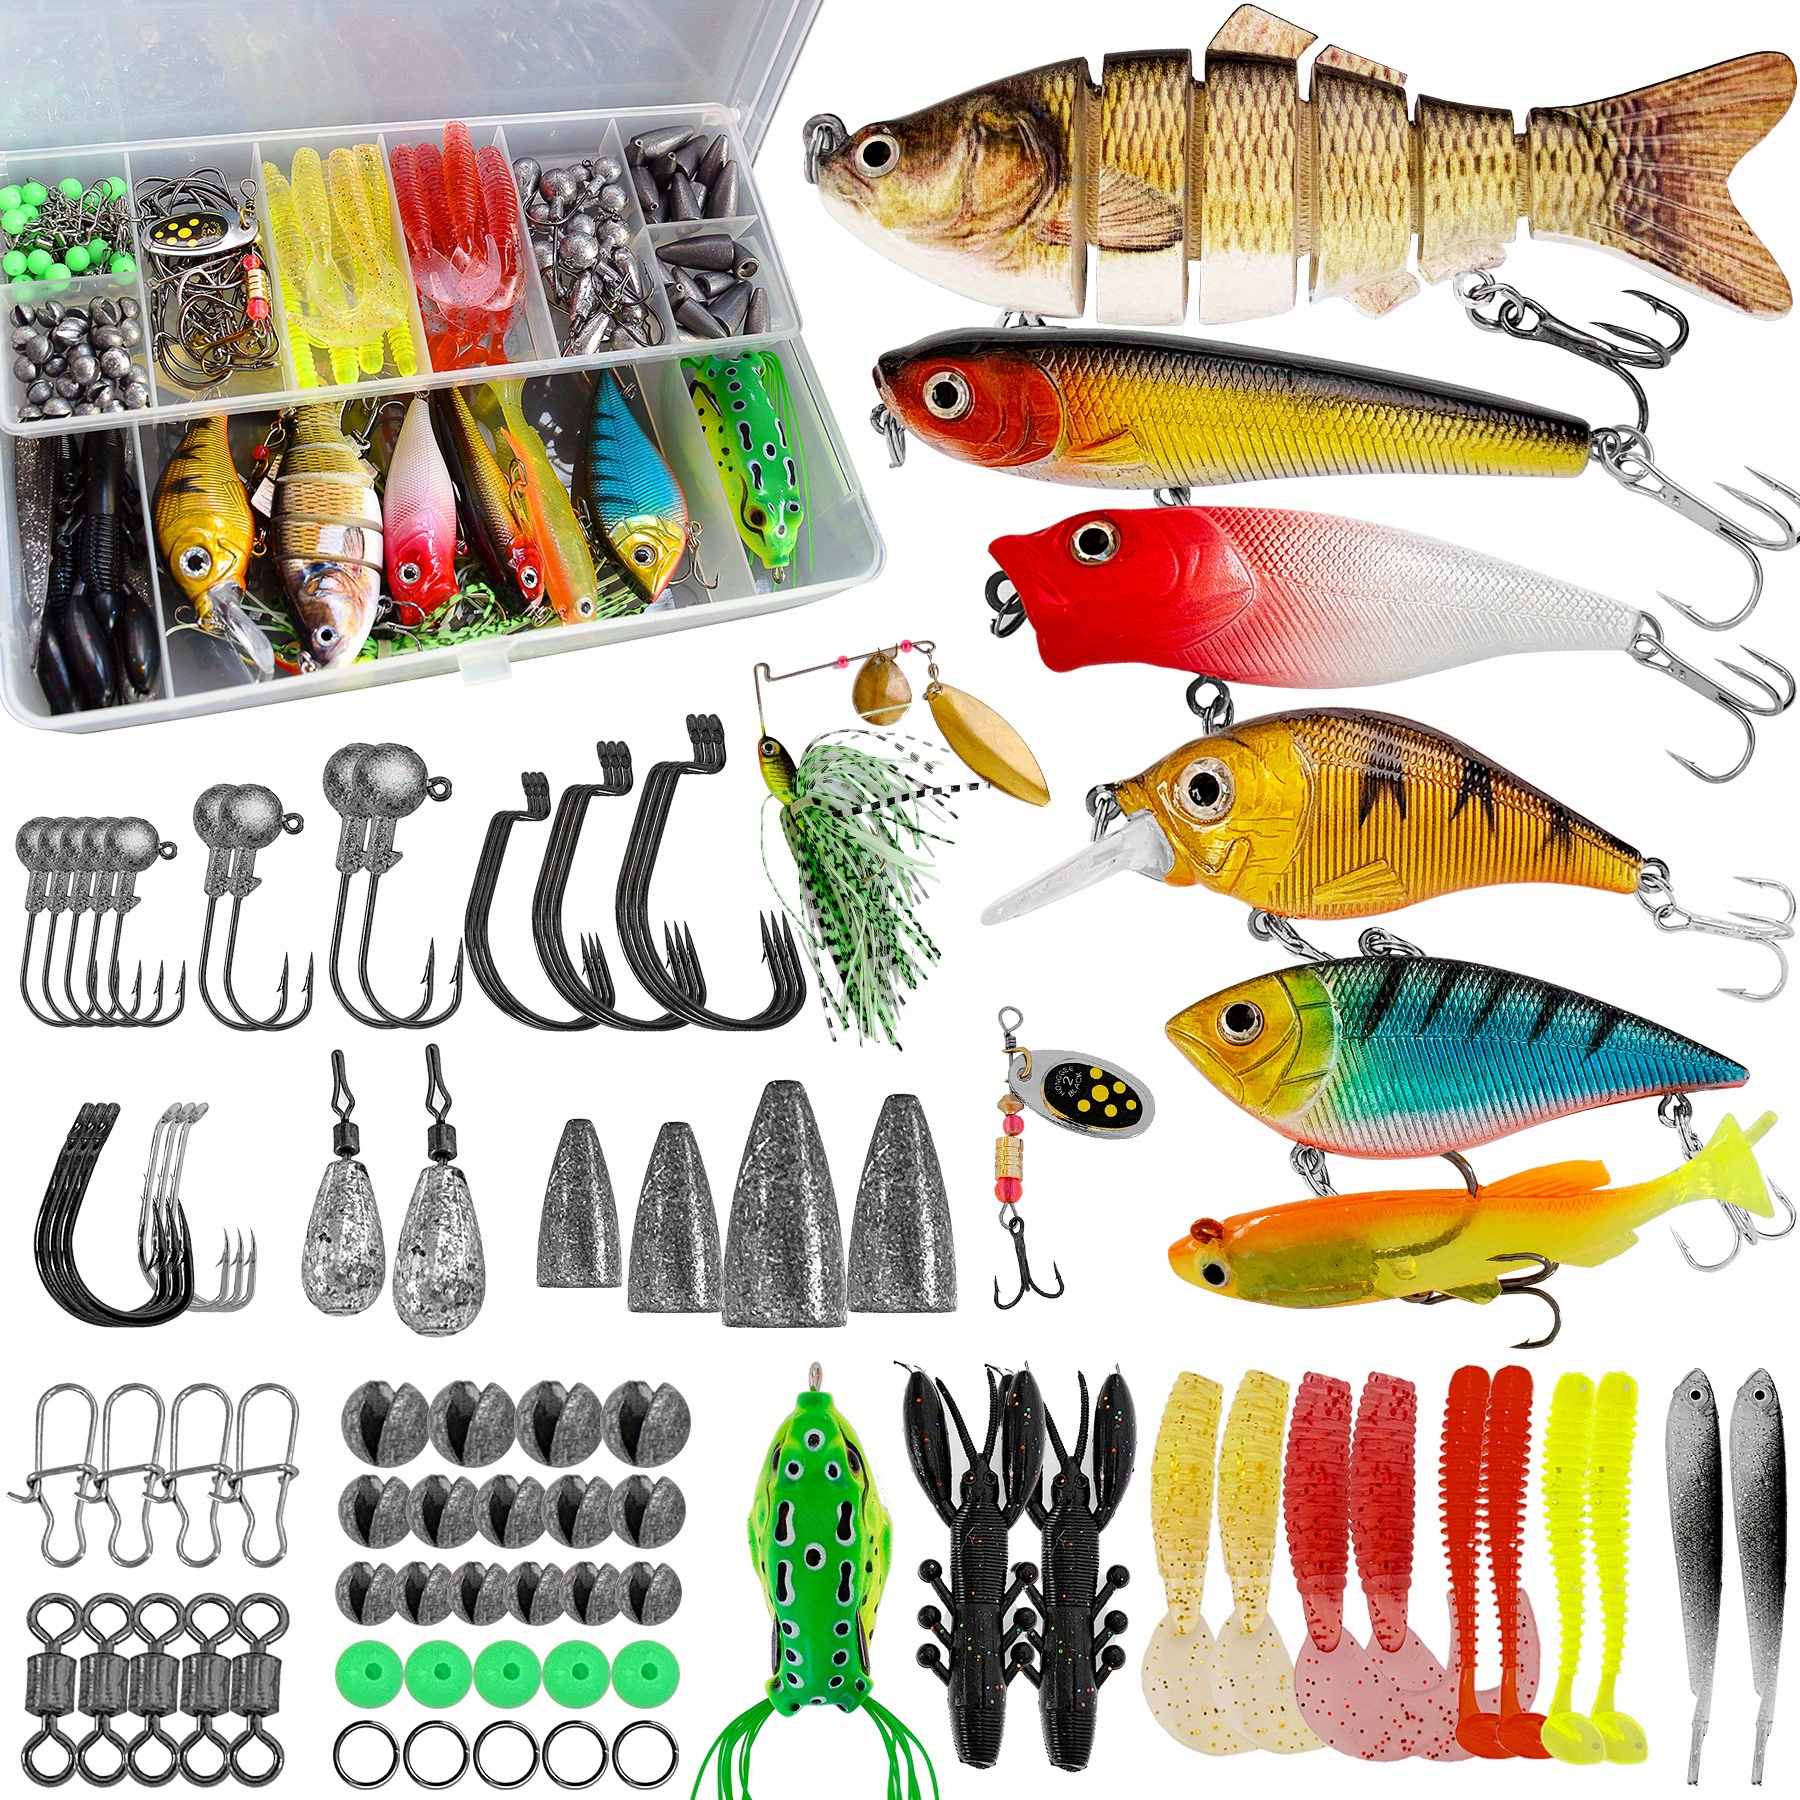 CHSEEO Fishing Lure Kits 31 pcs Fishing Lure Set Fishing Baits Kit